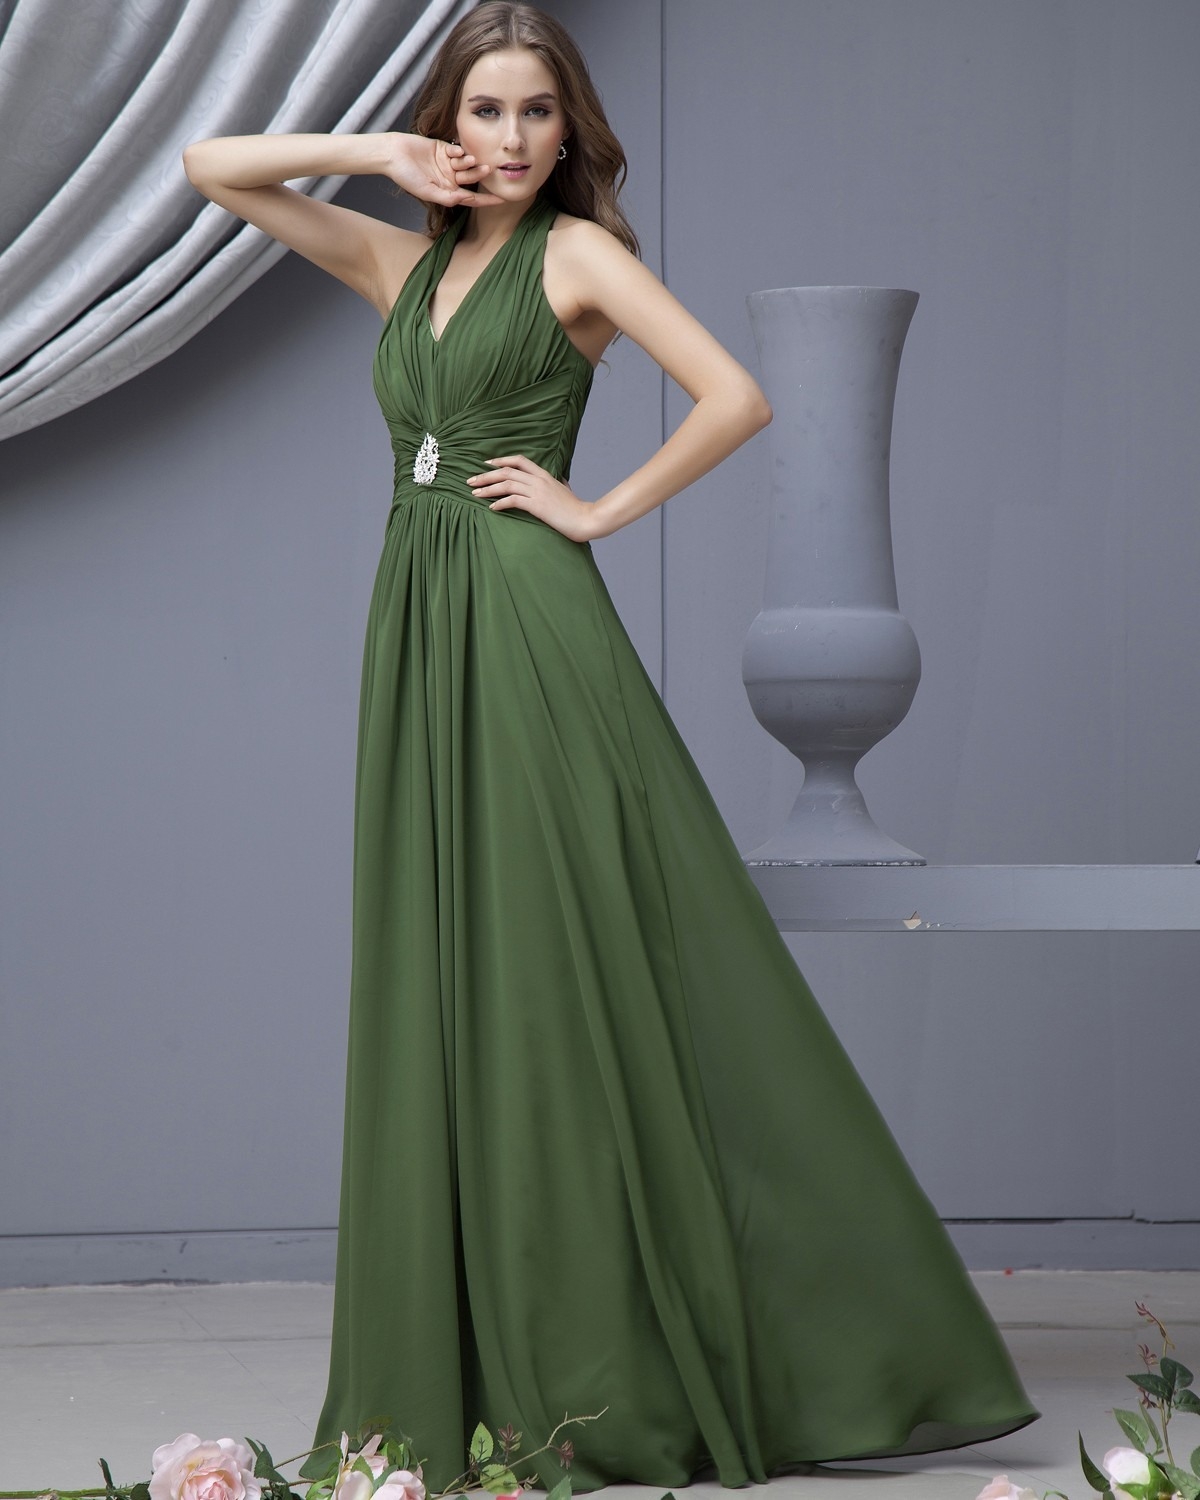 Abend Einfach Kleid Dunkelgrün Lang VertriebFormal Wunderbar Kleid Dunkelgrün Lang Spezialgebiet